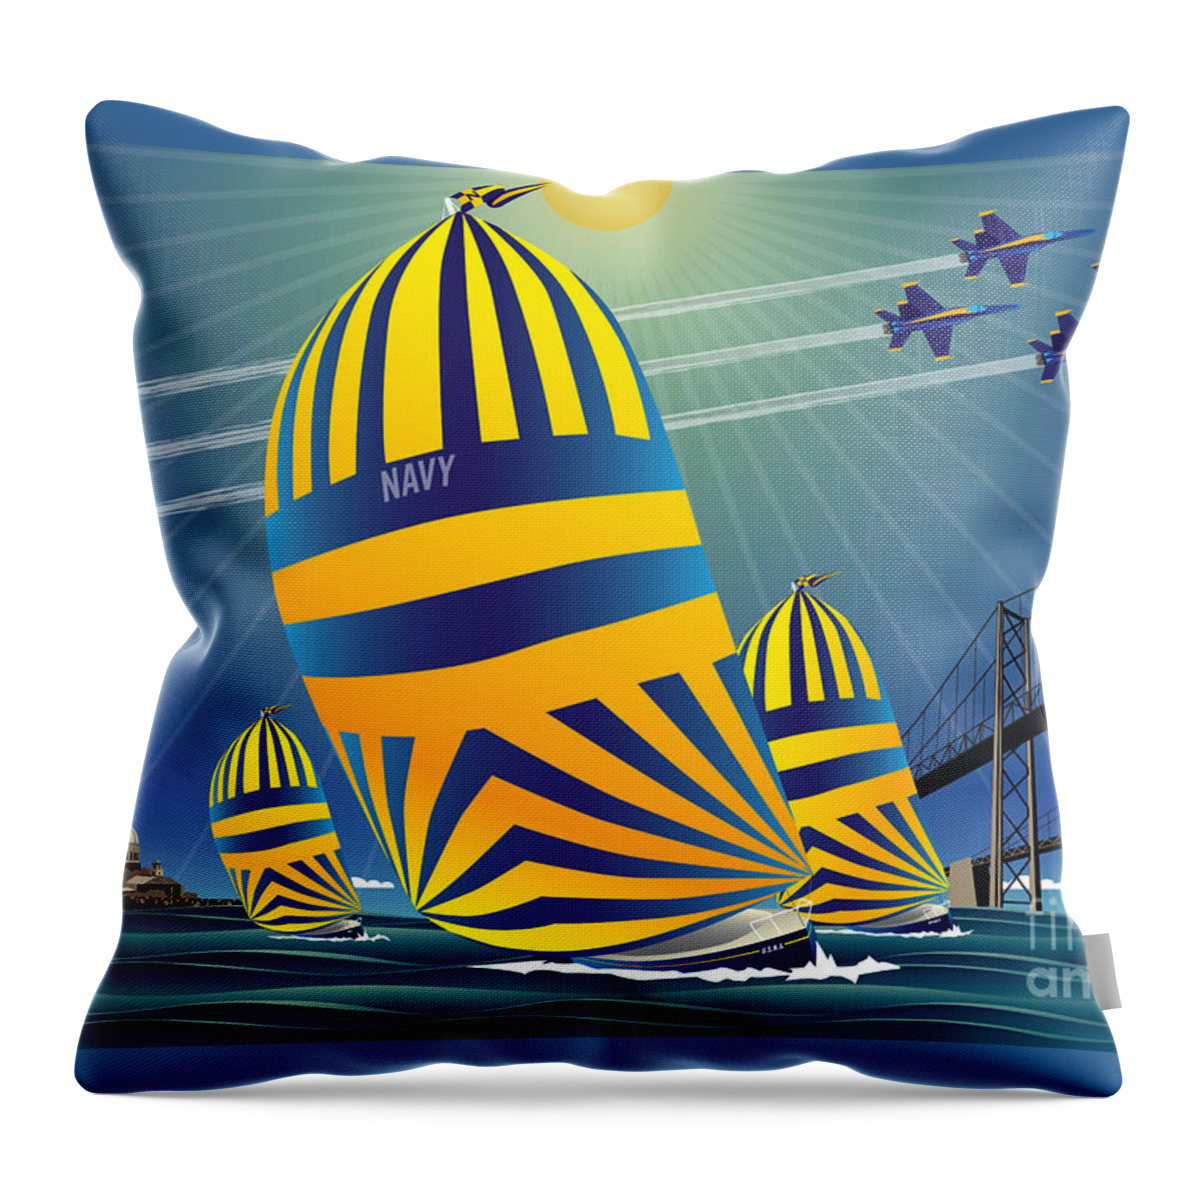 Navy 44s Throw Pillow featuring the digital art USNA High Noon Sail by Joe Barsin